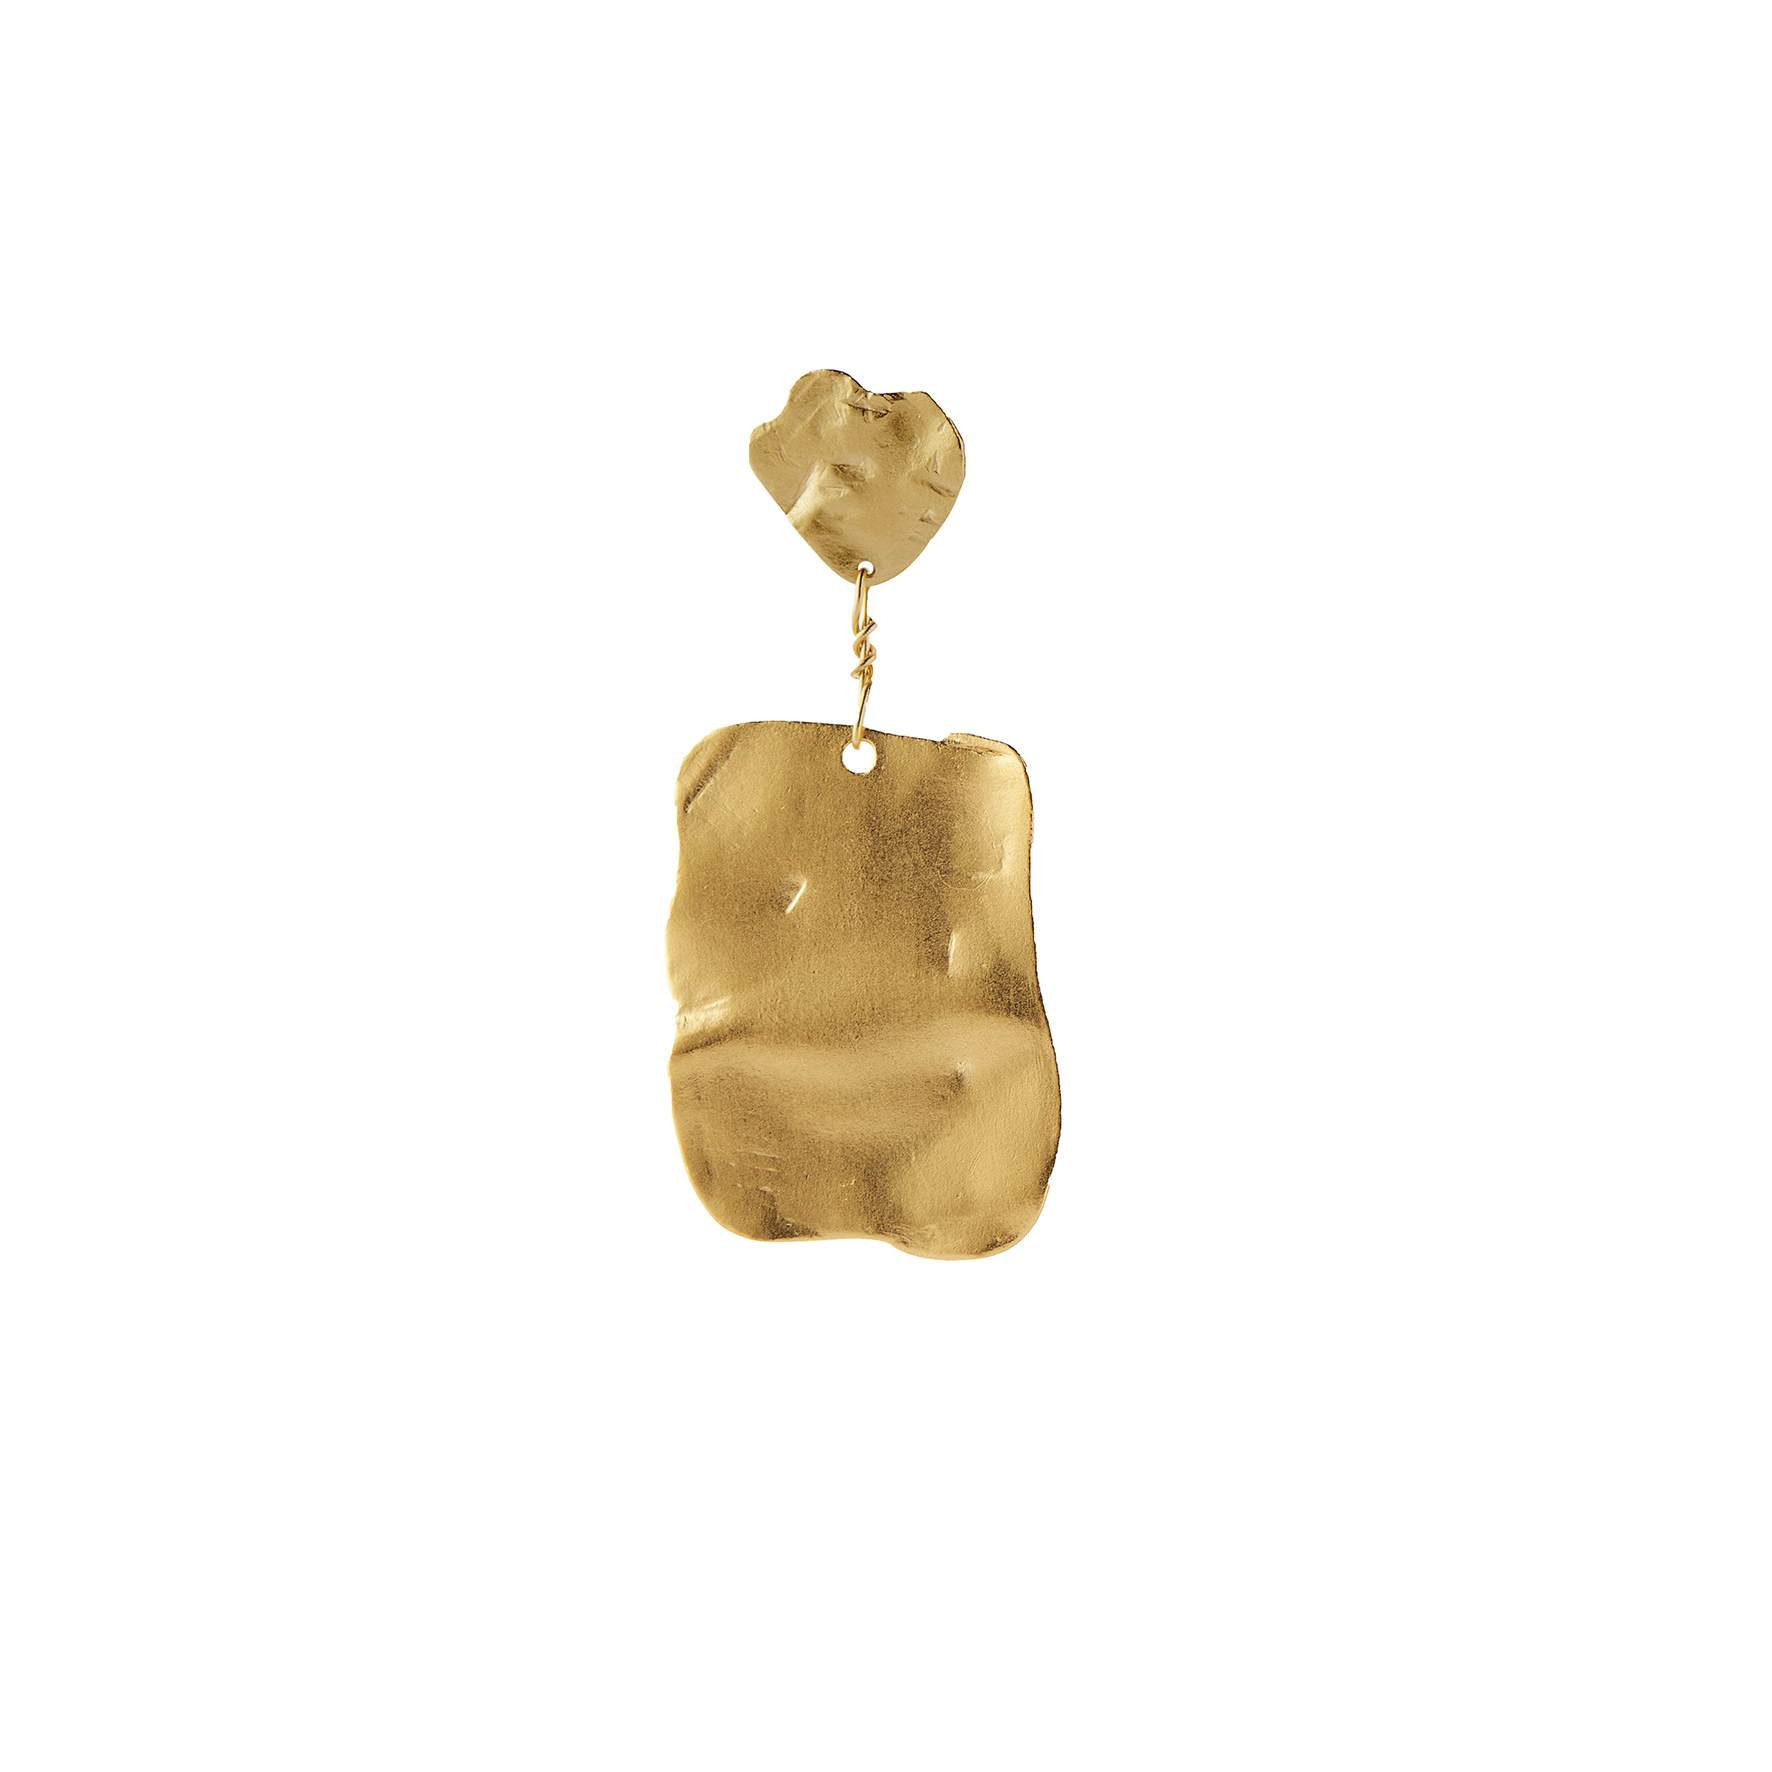 Golden Reflection Earring von STINE A Jewelry in Vergoldet-Silber Sterling 925